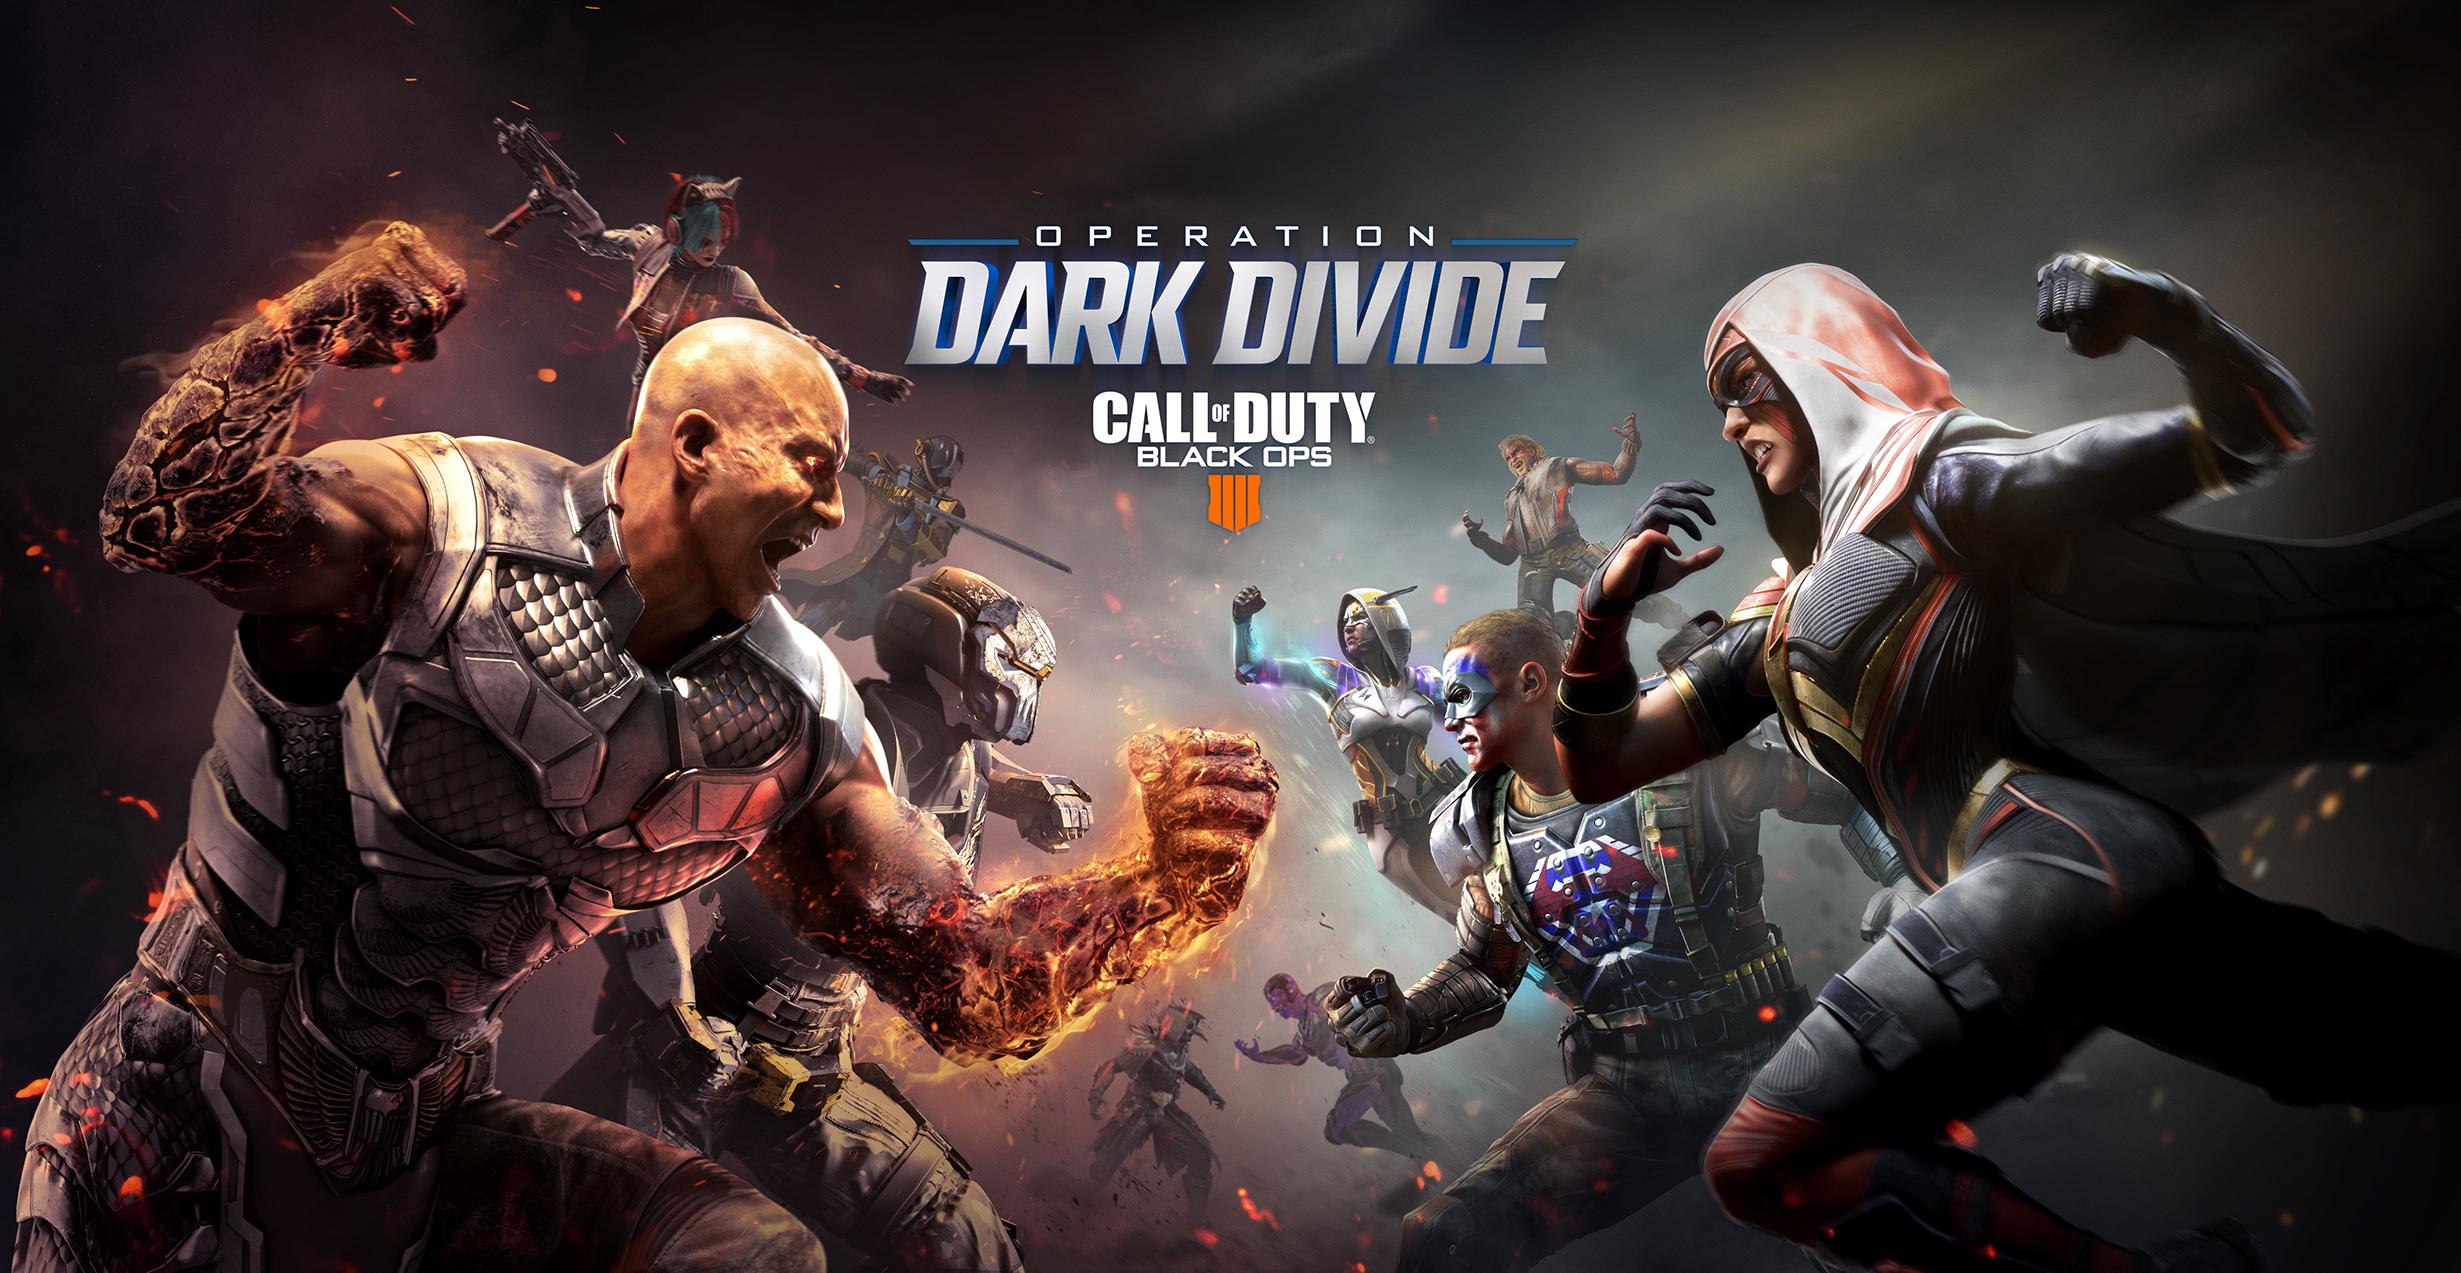 Call of Duty: Black Ops 4 Blackout Beta - Termine, Download und Spielmodi